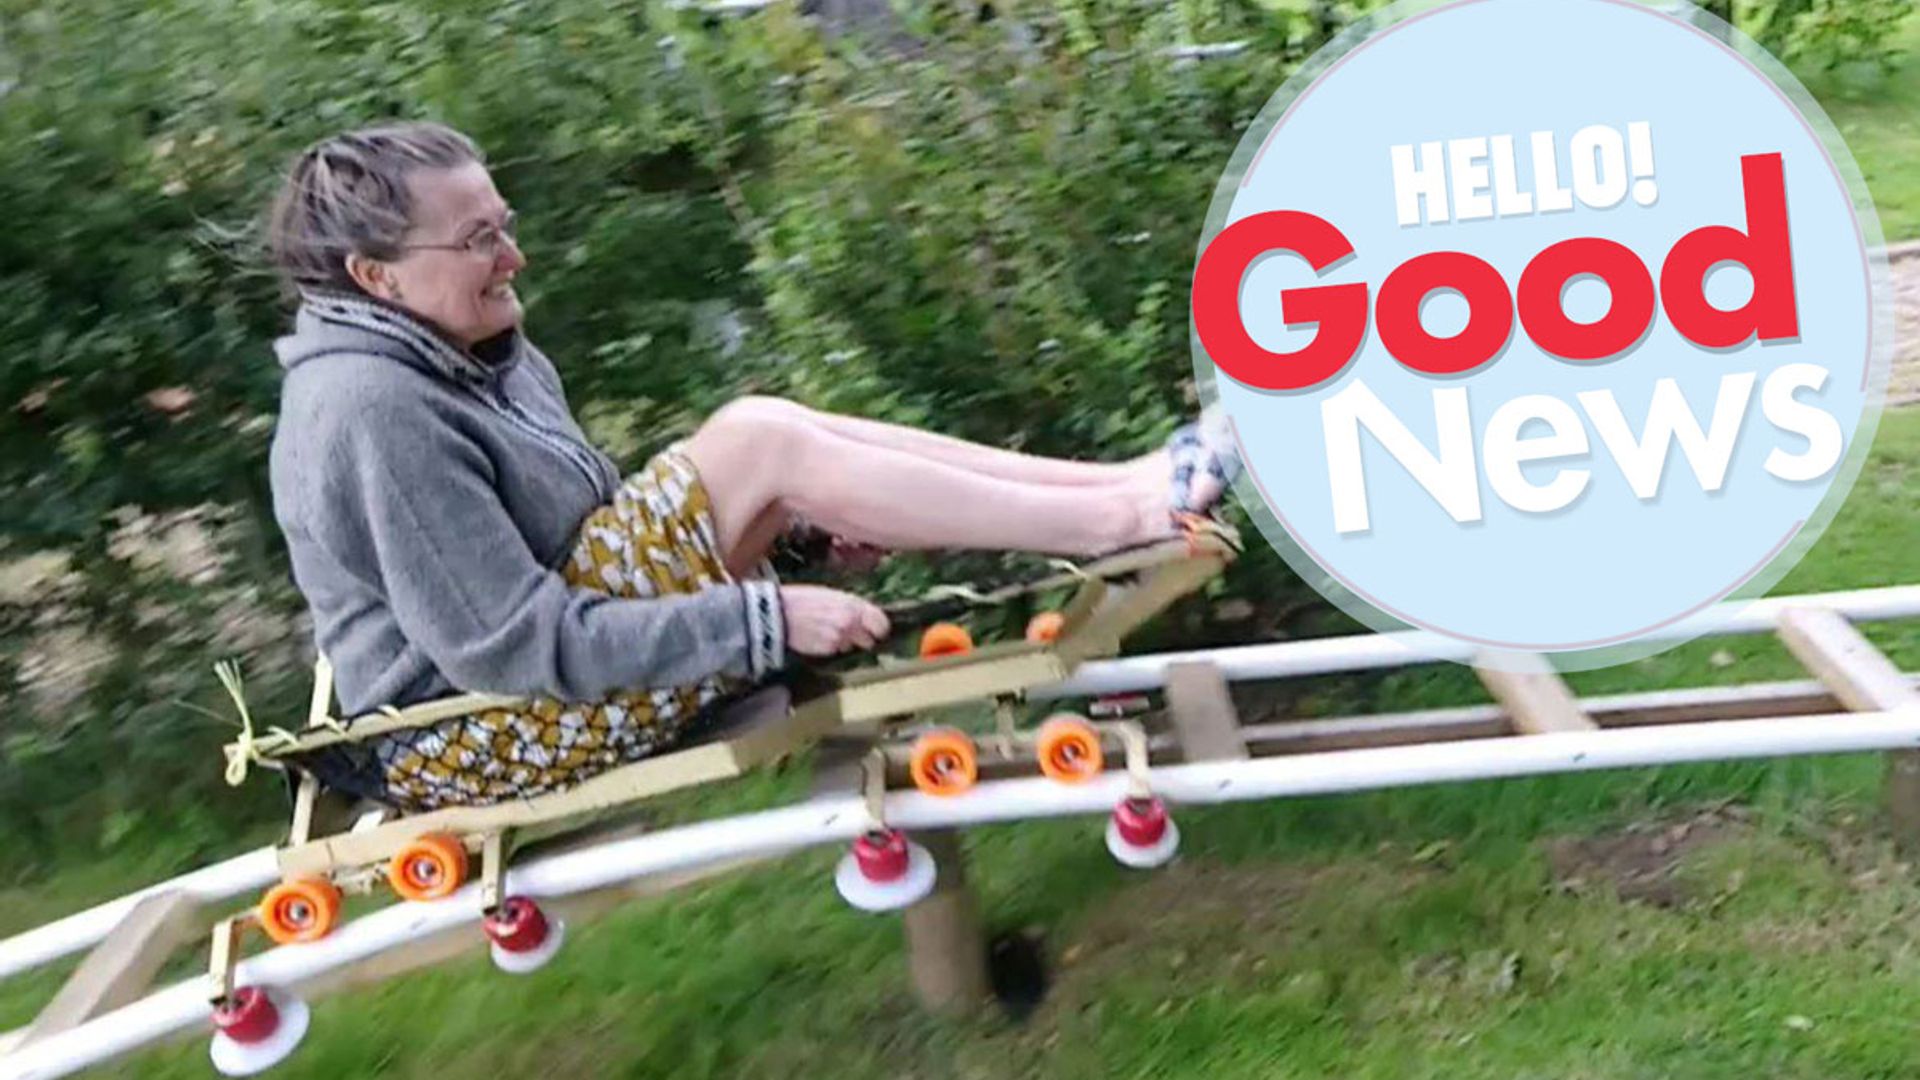 Uncle makes nephew's dreams come true by building a rollercoaster in his garden